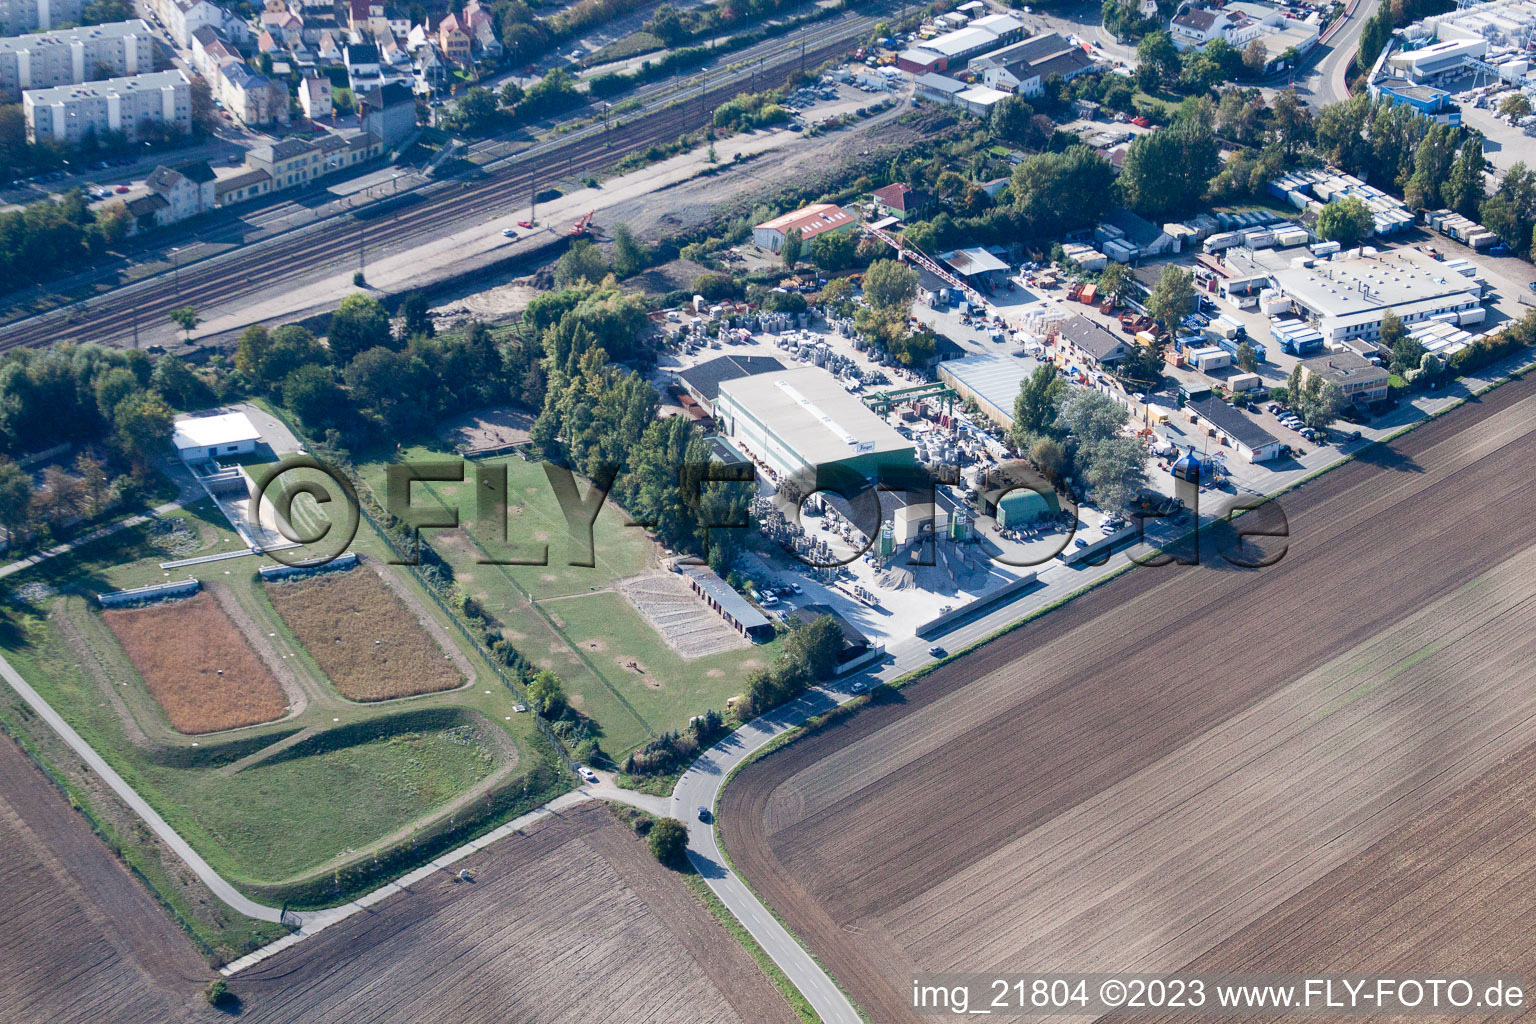 Aerial view of Finger Baustoffwerk GmbH in the district Oggersheim in Ludwigshafen am Rhein in the state Rhineland-Palatinate, Germany